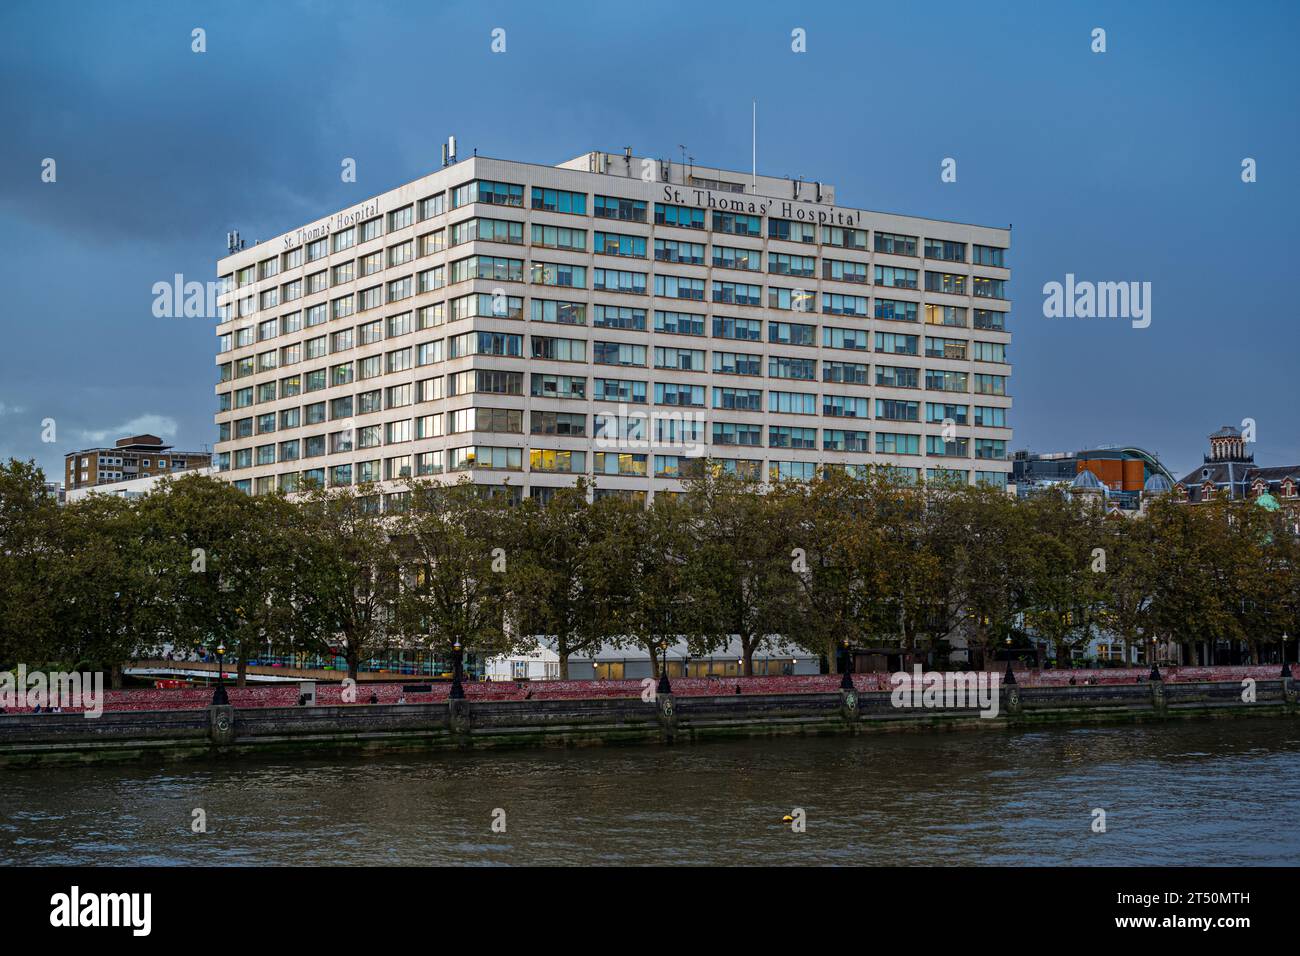 St. Thomas' Hospital London. Das St Thomas’s Hospital ist ein großes NHS-Lehrkrankenhaus am Ufer der Themse in Zentral-London. Stockfoto